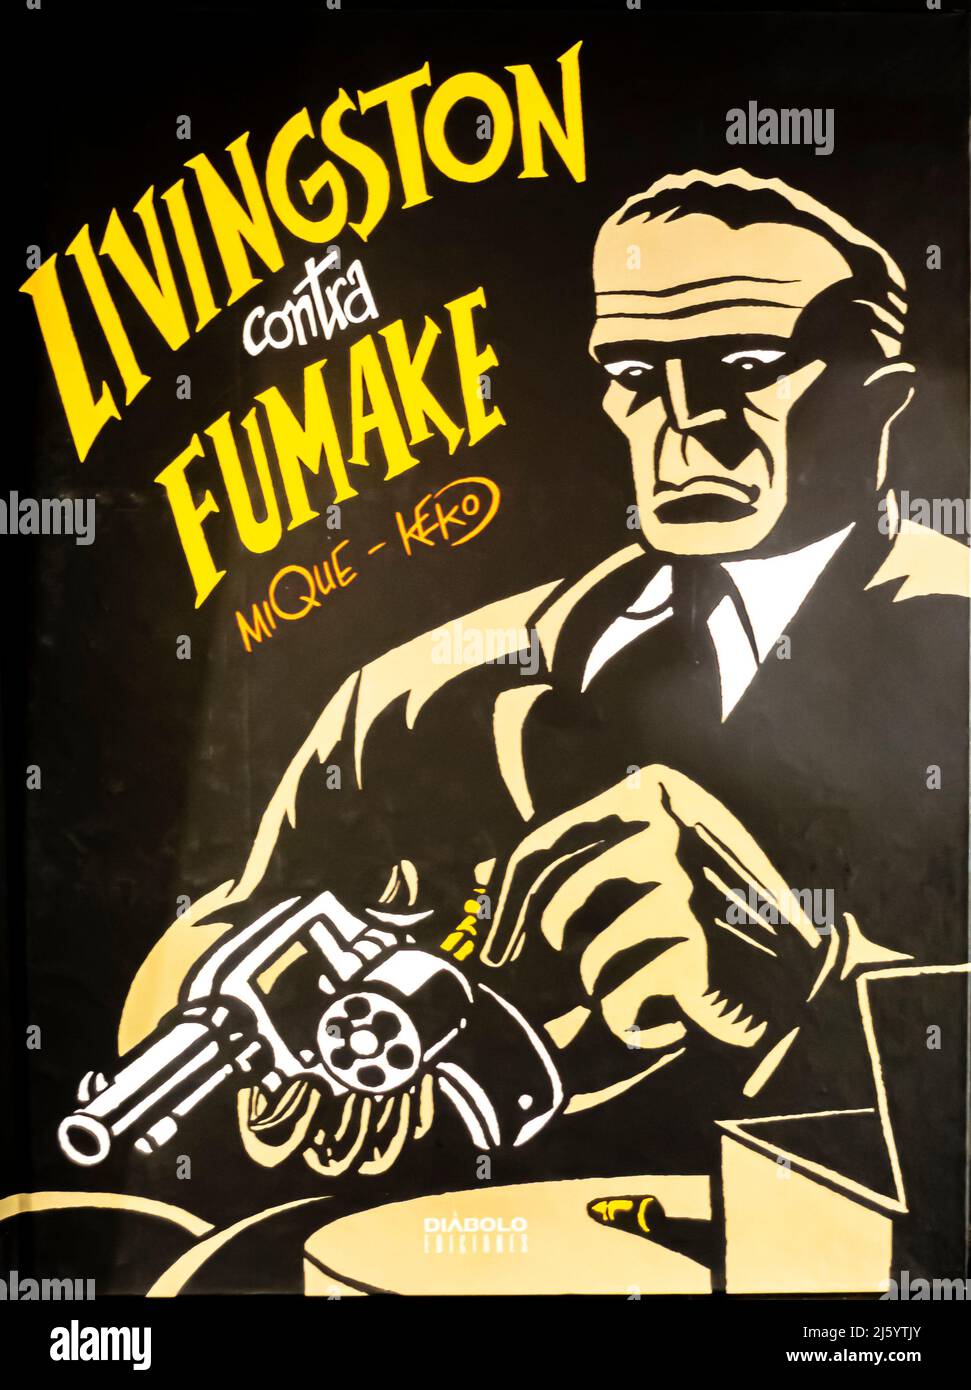 Universal Comics LIVINGSTONE CONTRA FUMAKE. Comic-Hardcover. 2011 Stockfoto